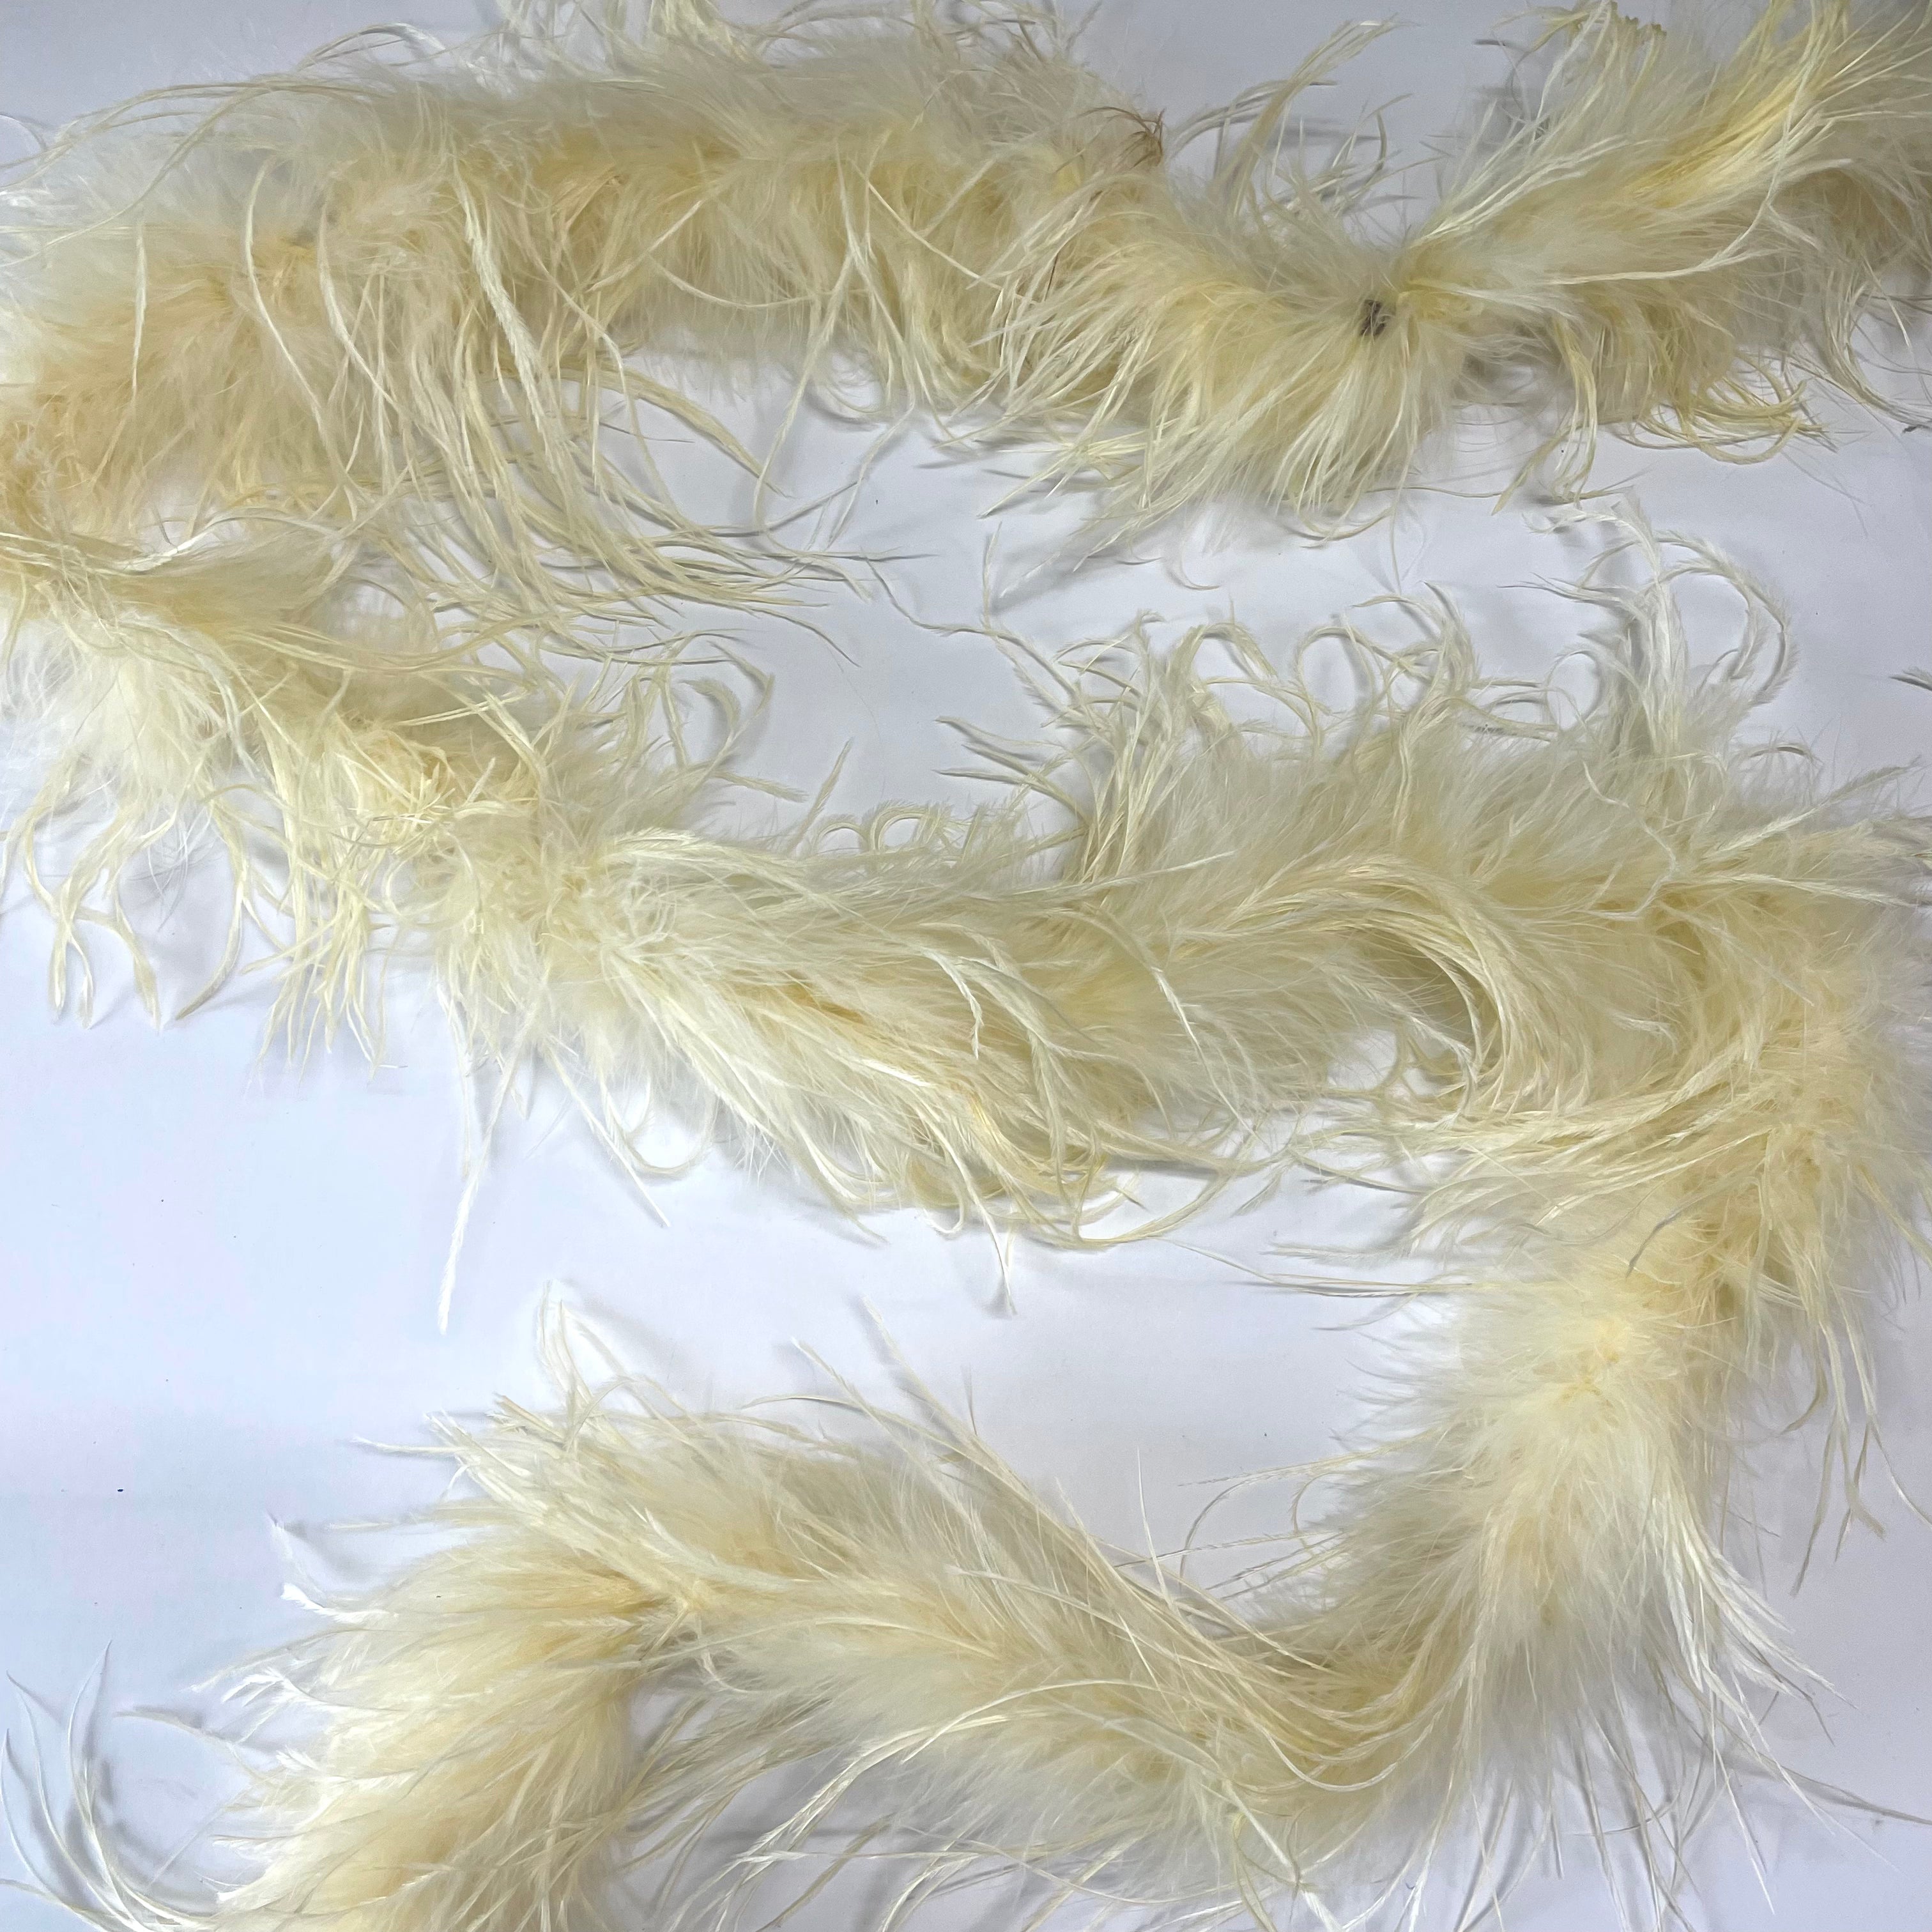 Ostrich & Marabou Feather Boa - Cream